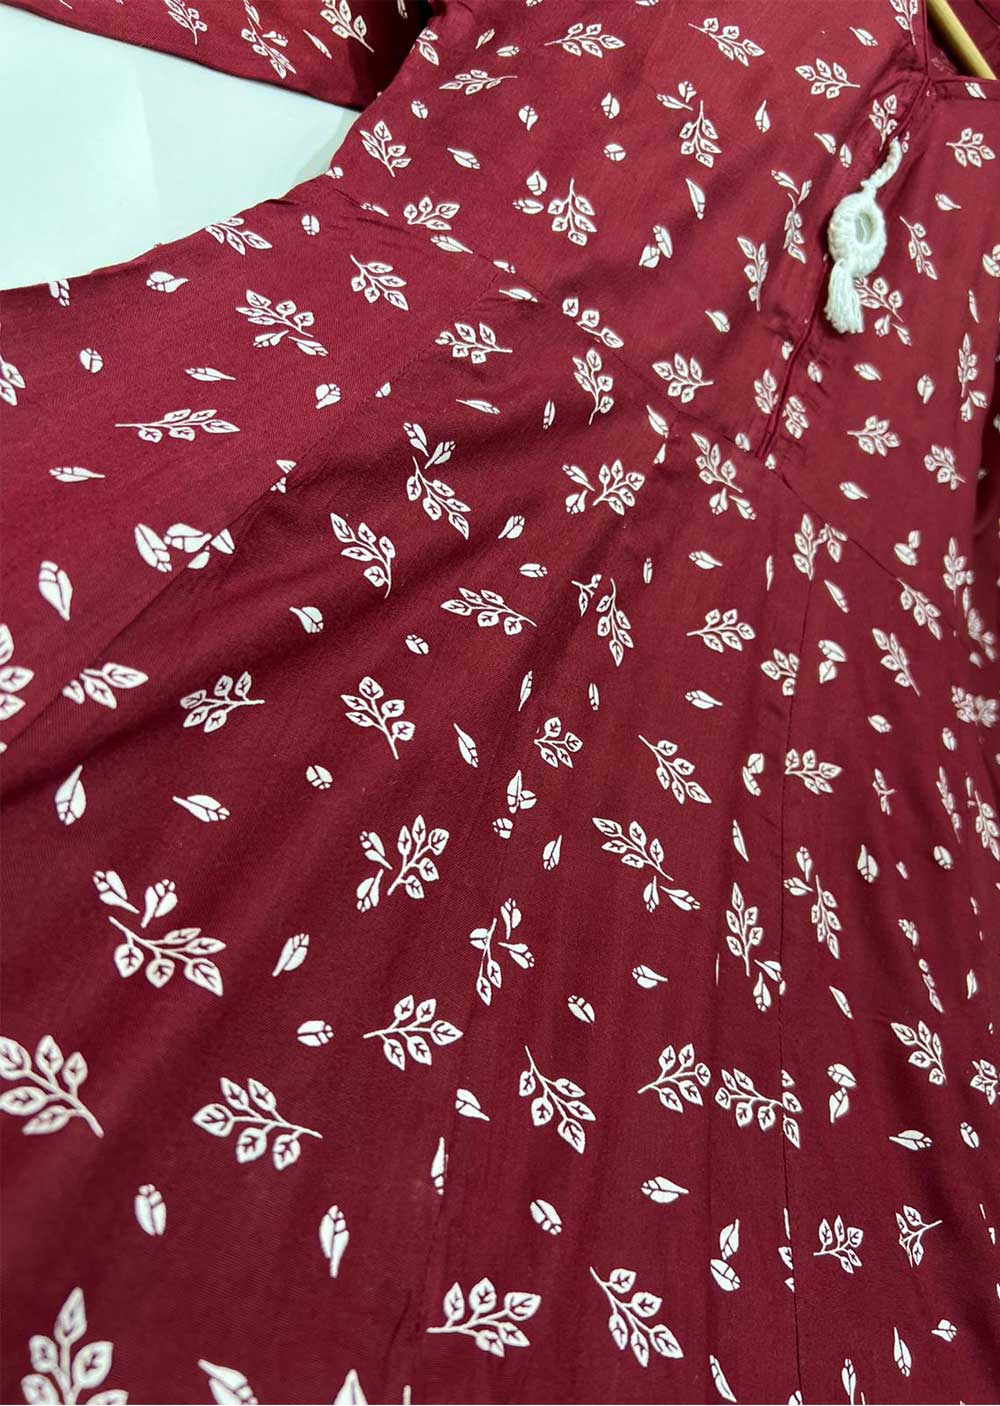 RGZ9913 Red Printed Linen Maxi Dress - Memsaab Online